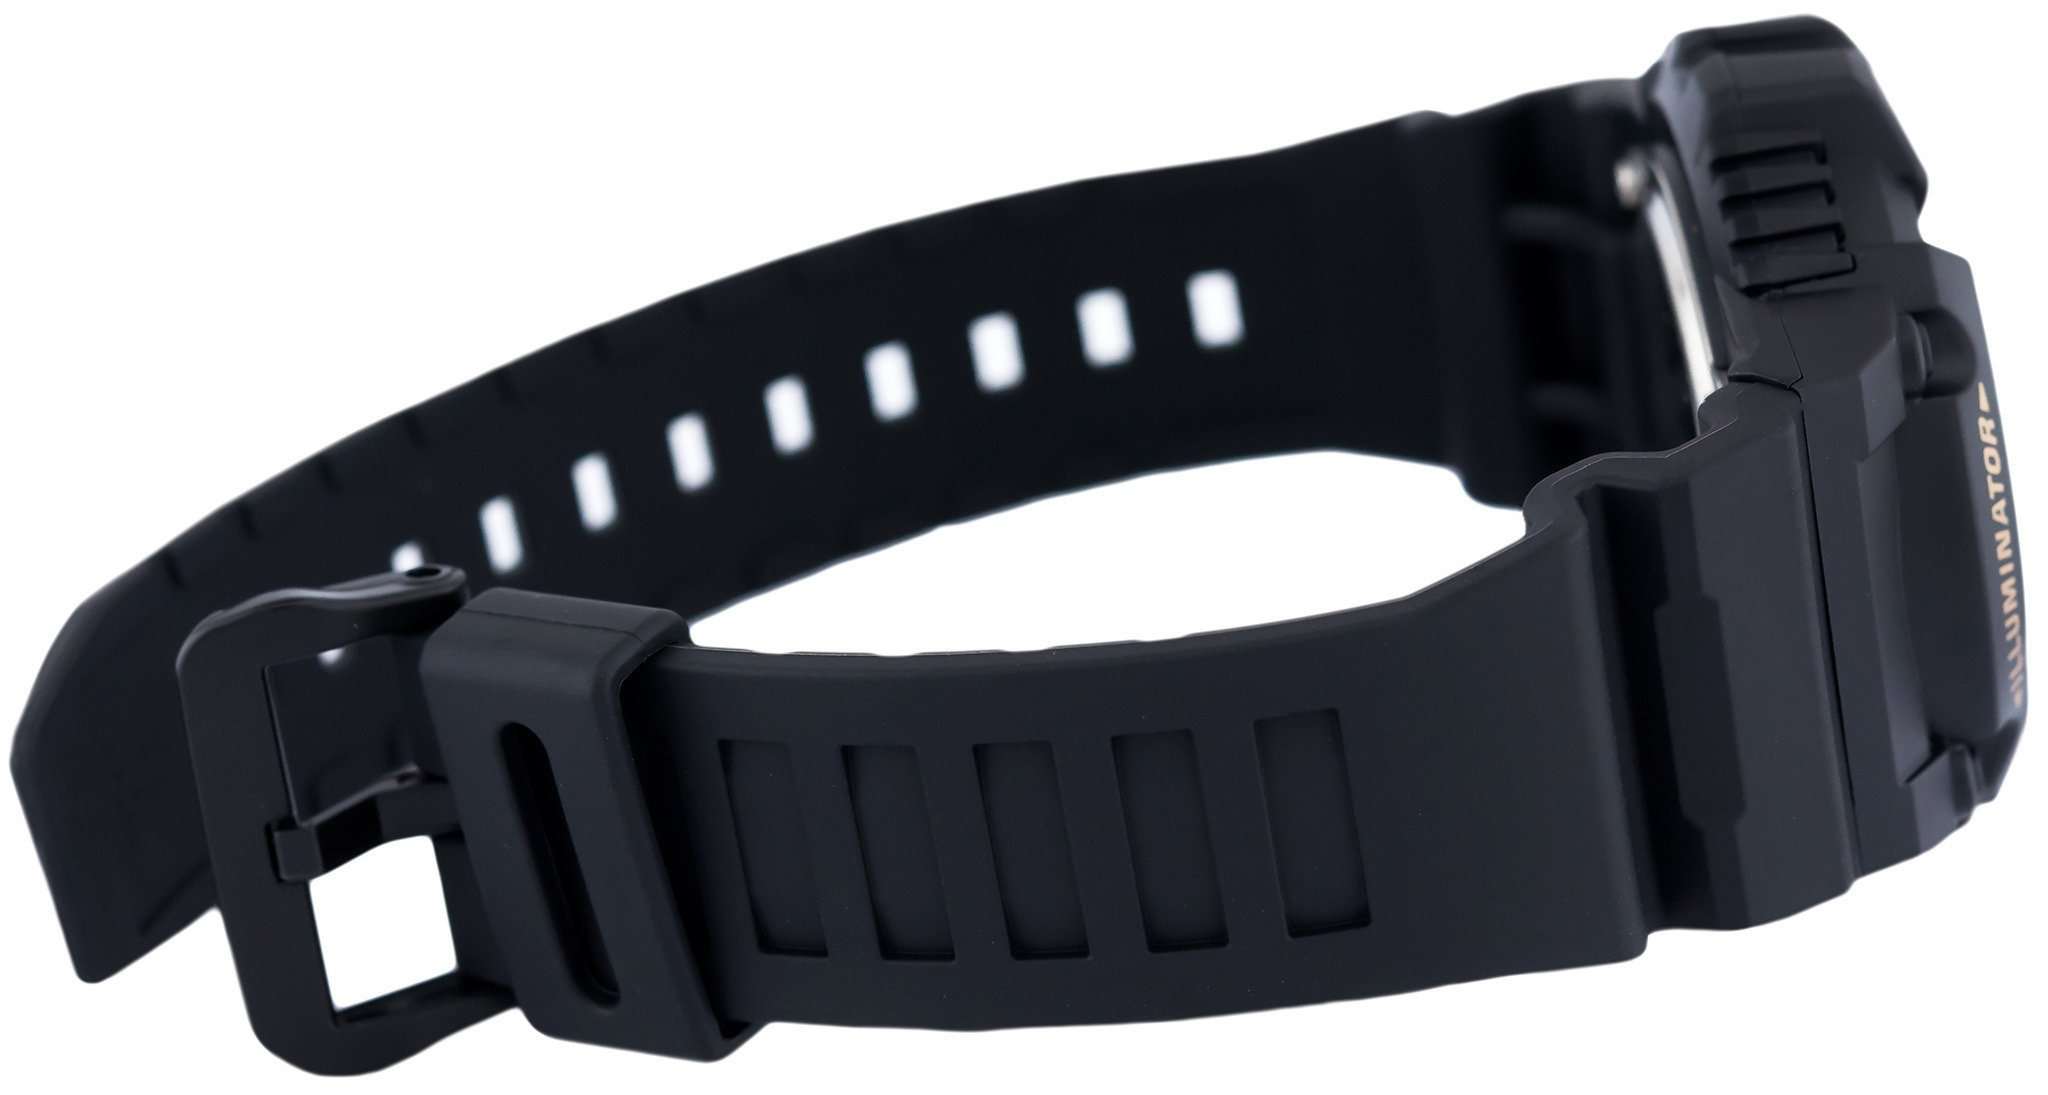 Casio HDC-700-9AVDF Black Resin Strap Watch for Men-Watch Portal Philippines